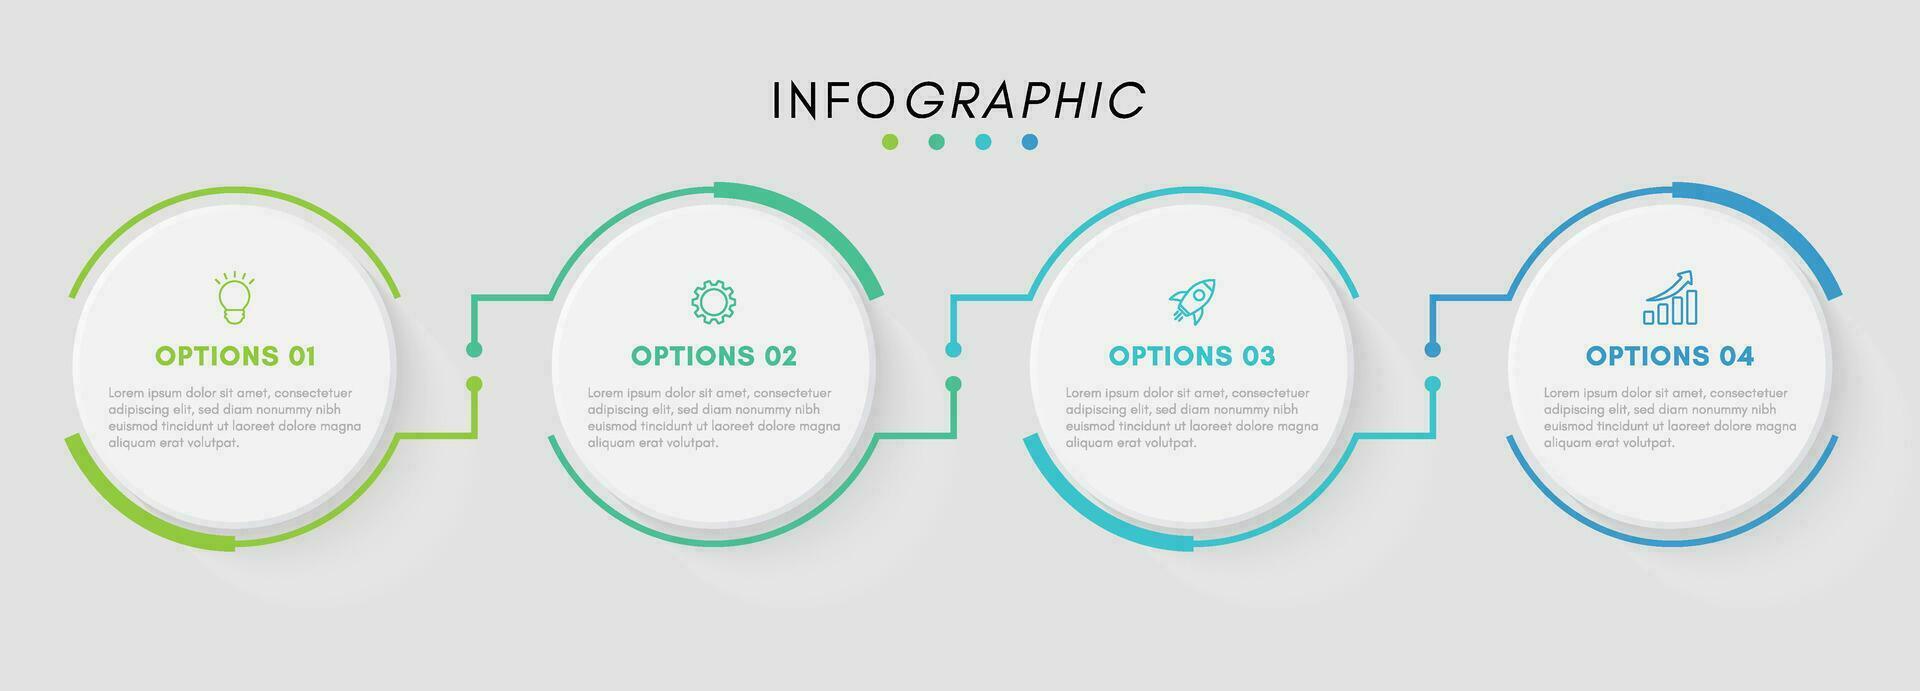 negocio infografía diseño modelo con 4 4 opciones o pasos. vector